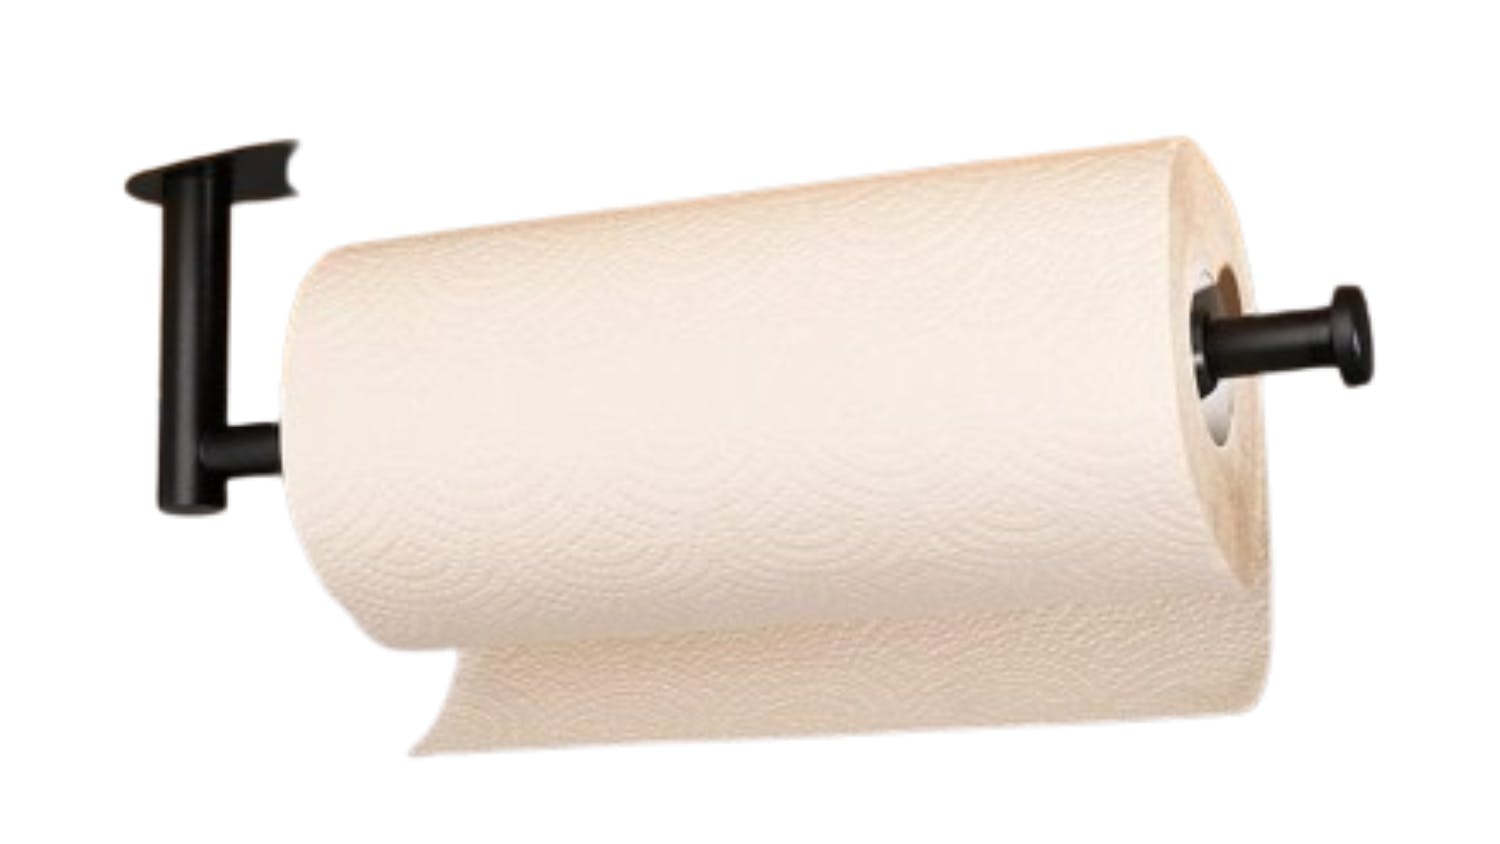 Kmall Secure Multi-Position Paper Towel Holder - Matte Black